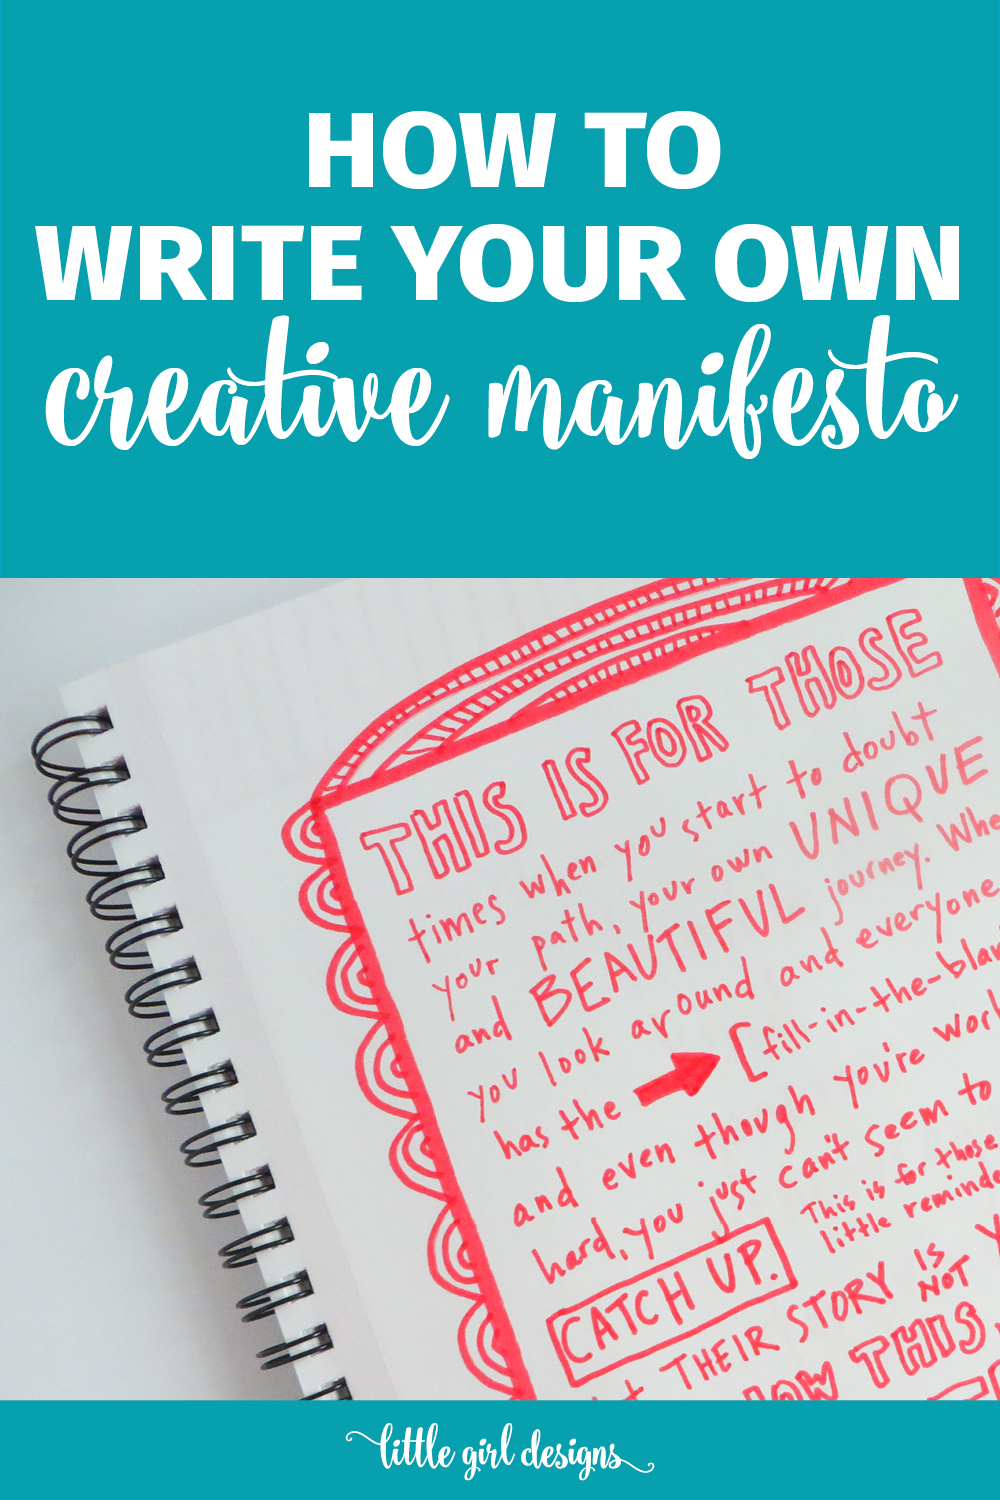 Write a Personal Creative Manifesto